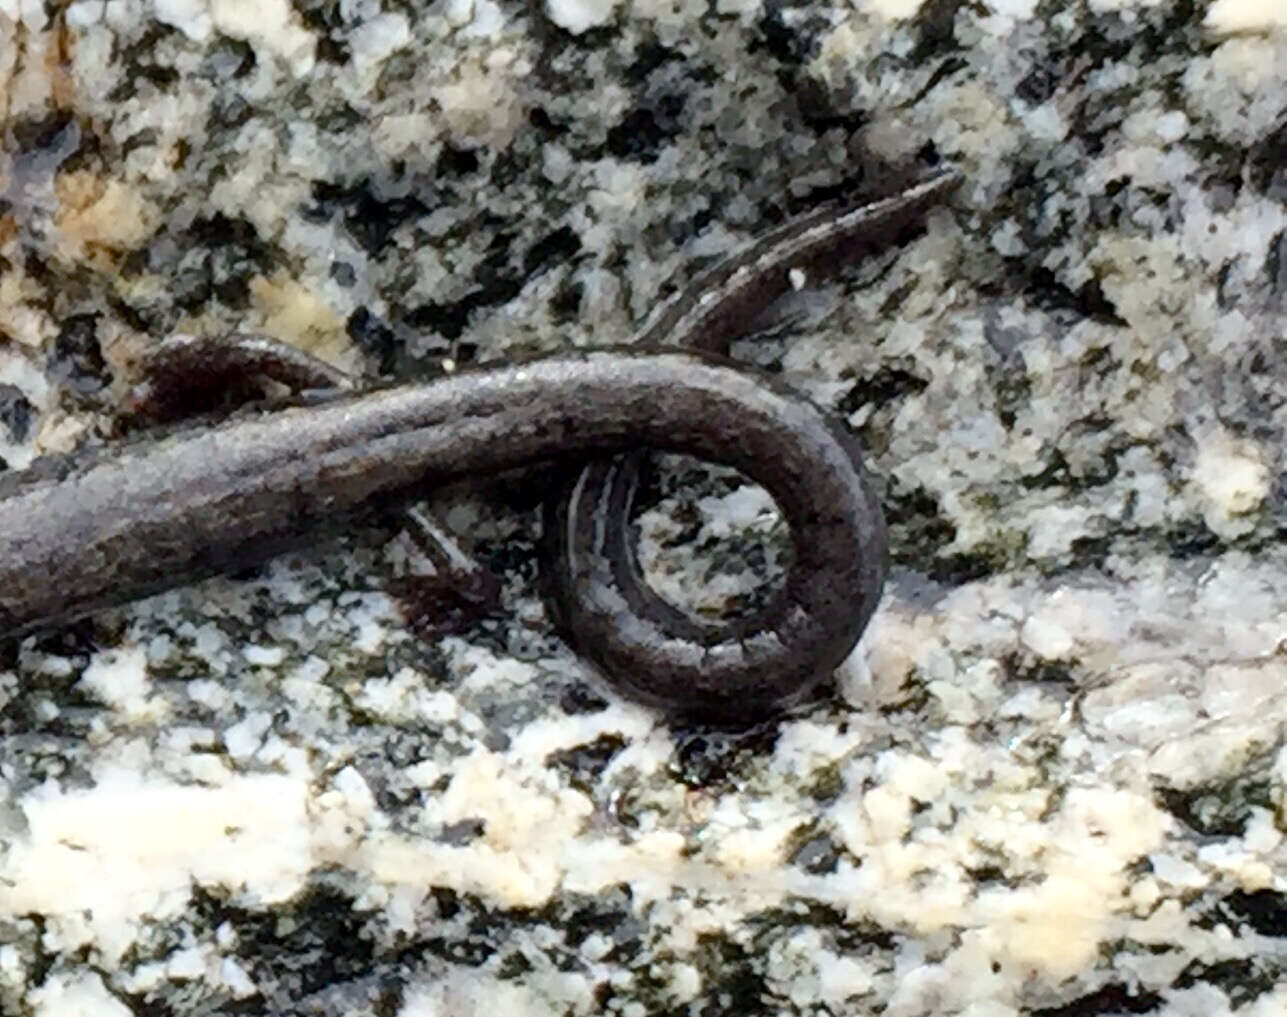 Image of Fairview Slender Salamander